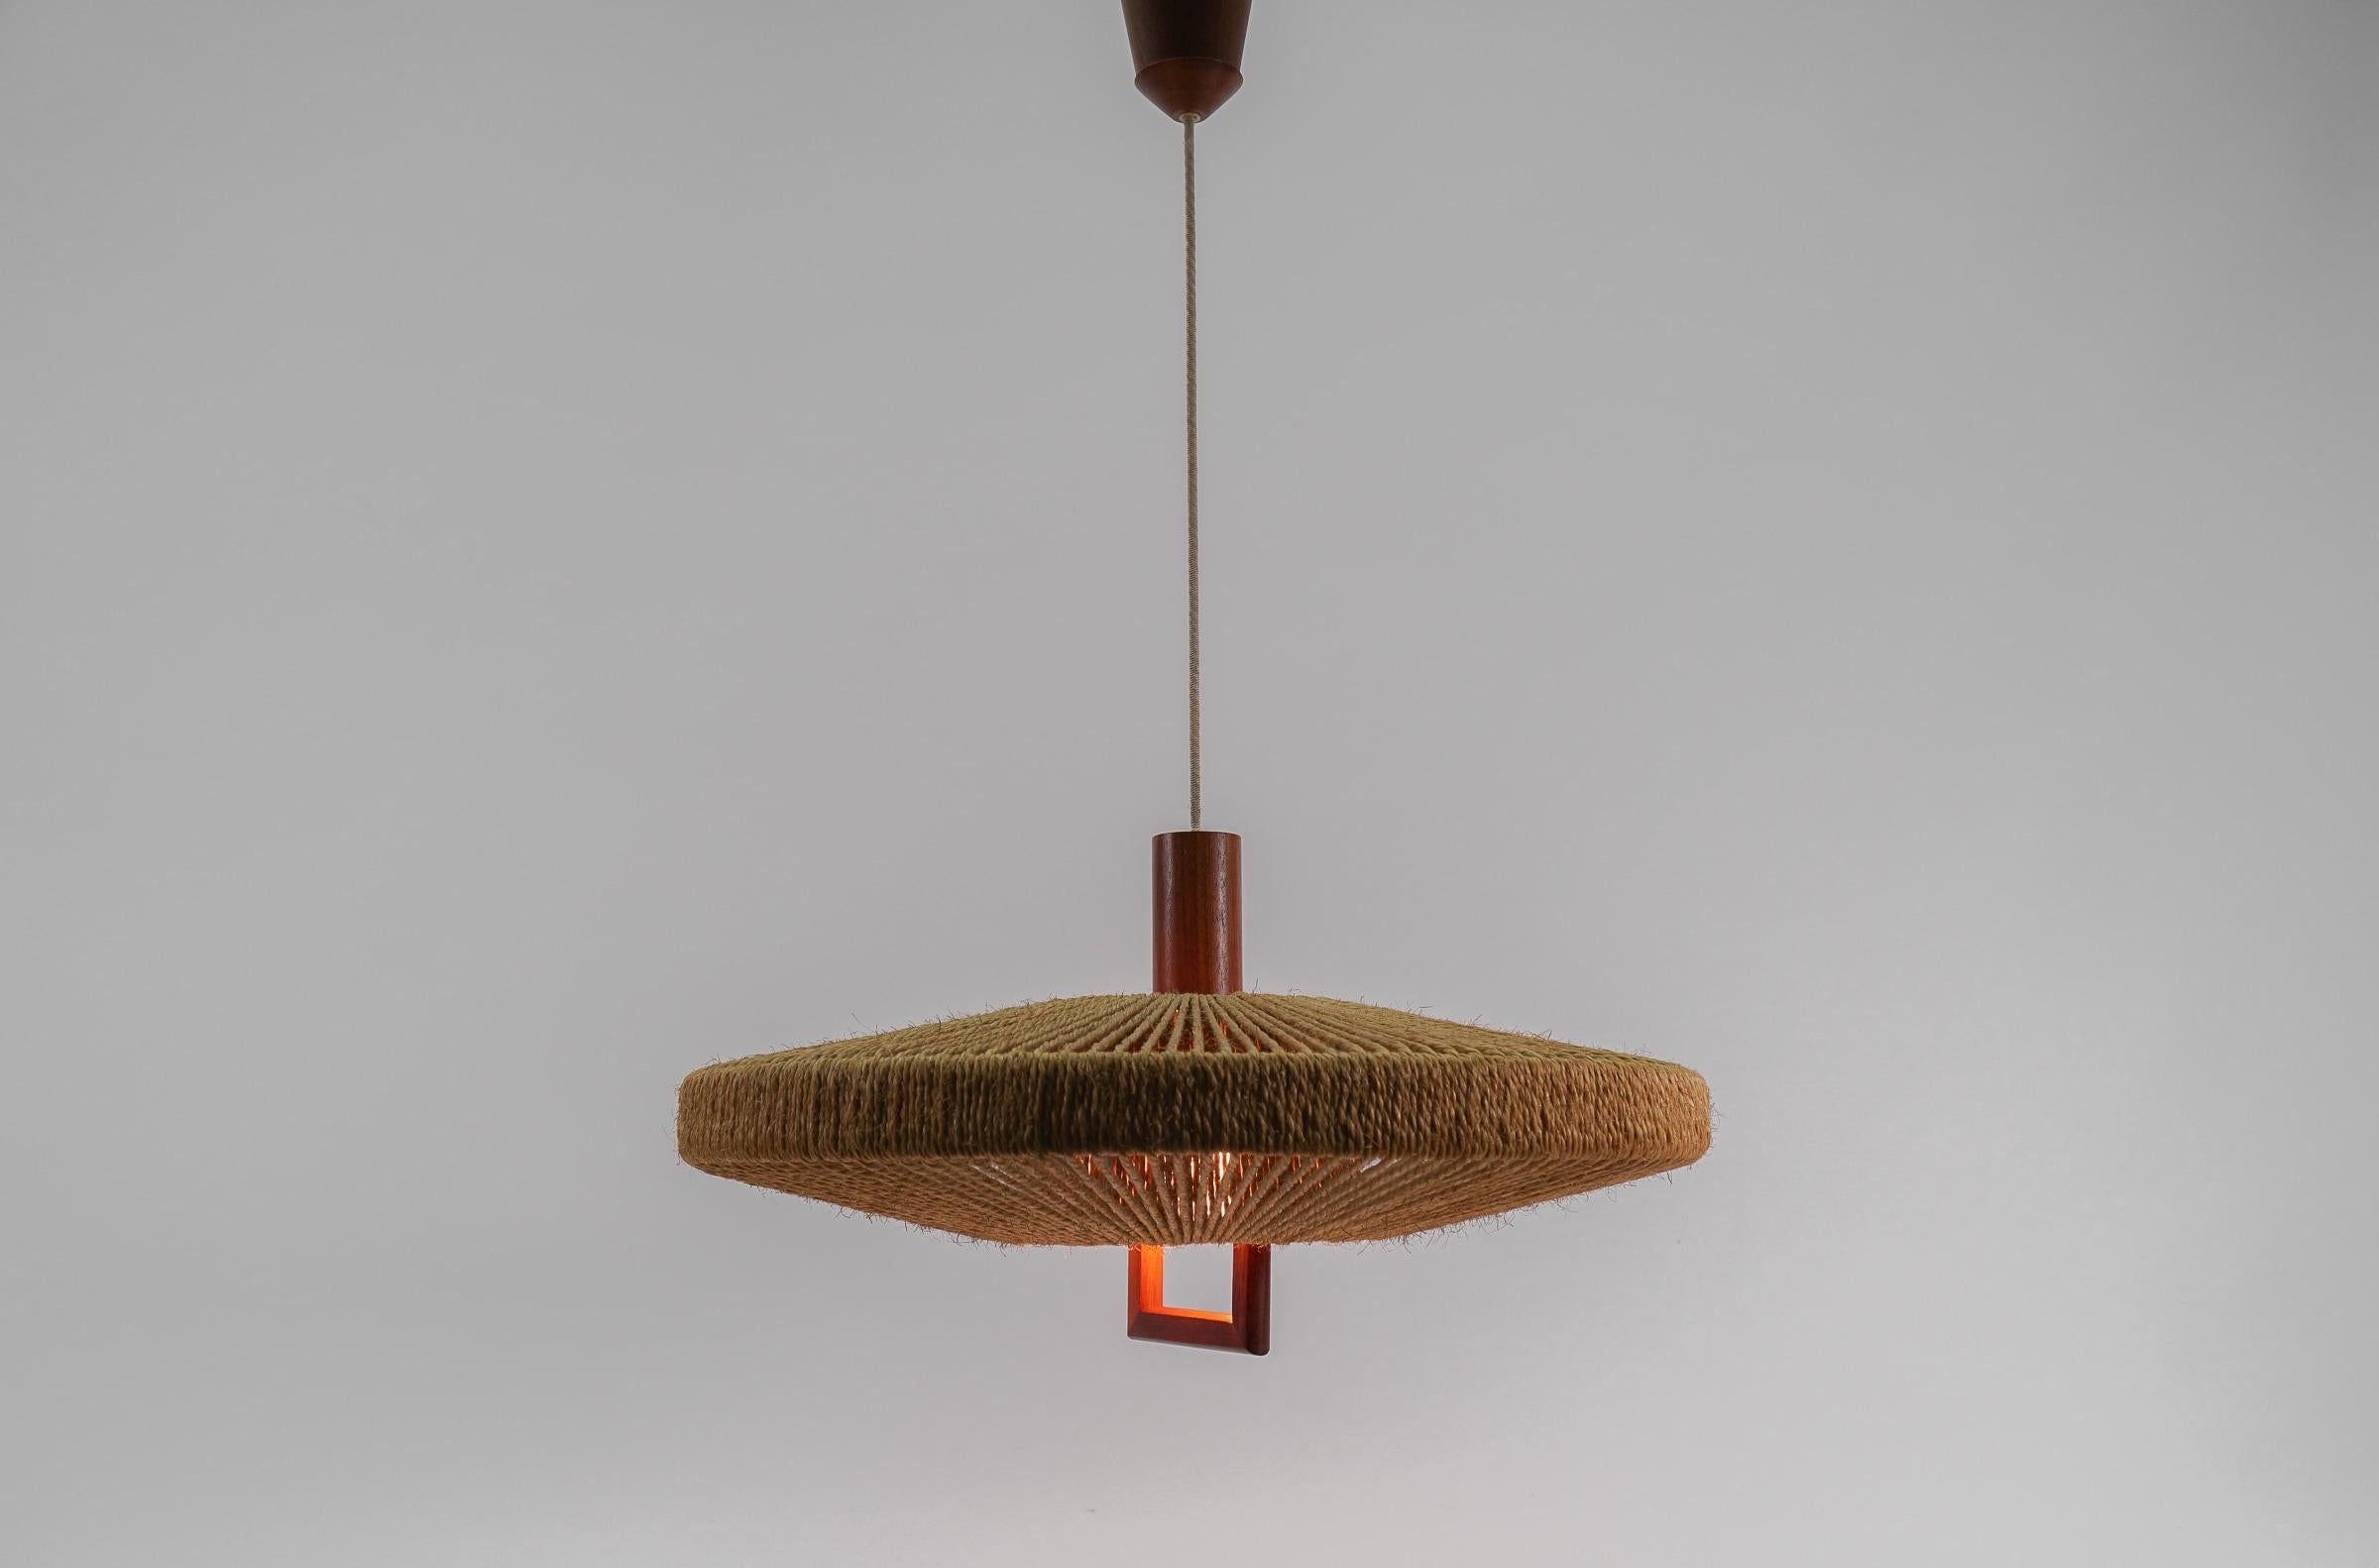 Scandinavian Modern Lovely Adjustable Ceiling Lamp Made in Teak and Jute by Temde Swiss, 1960s For Sale